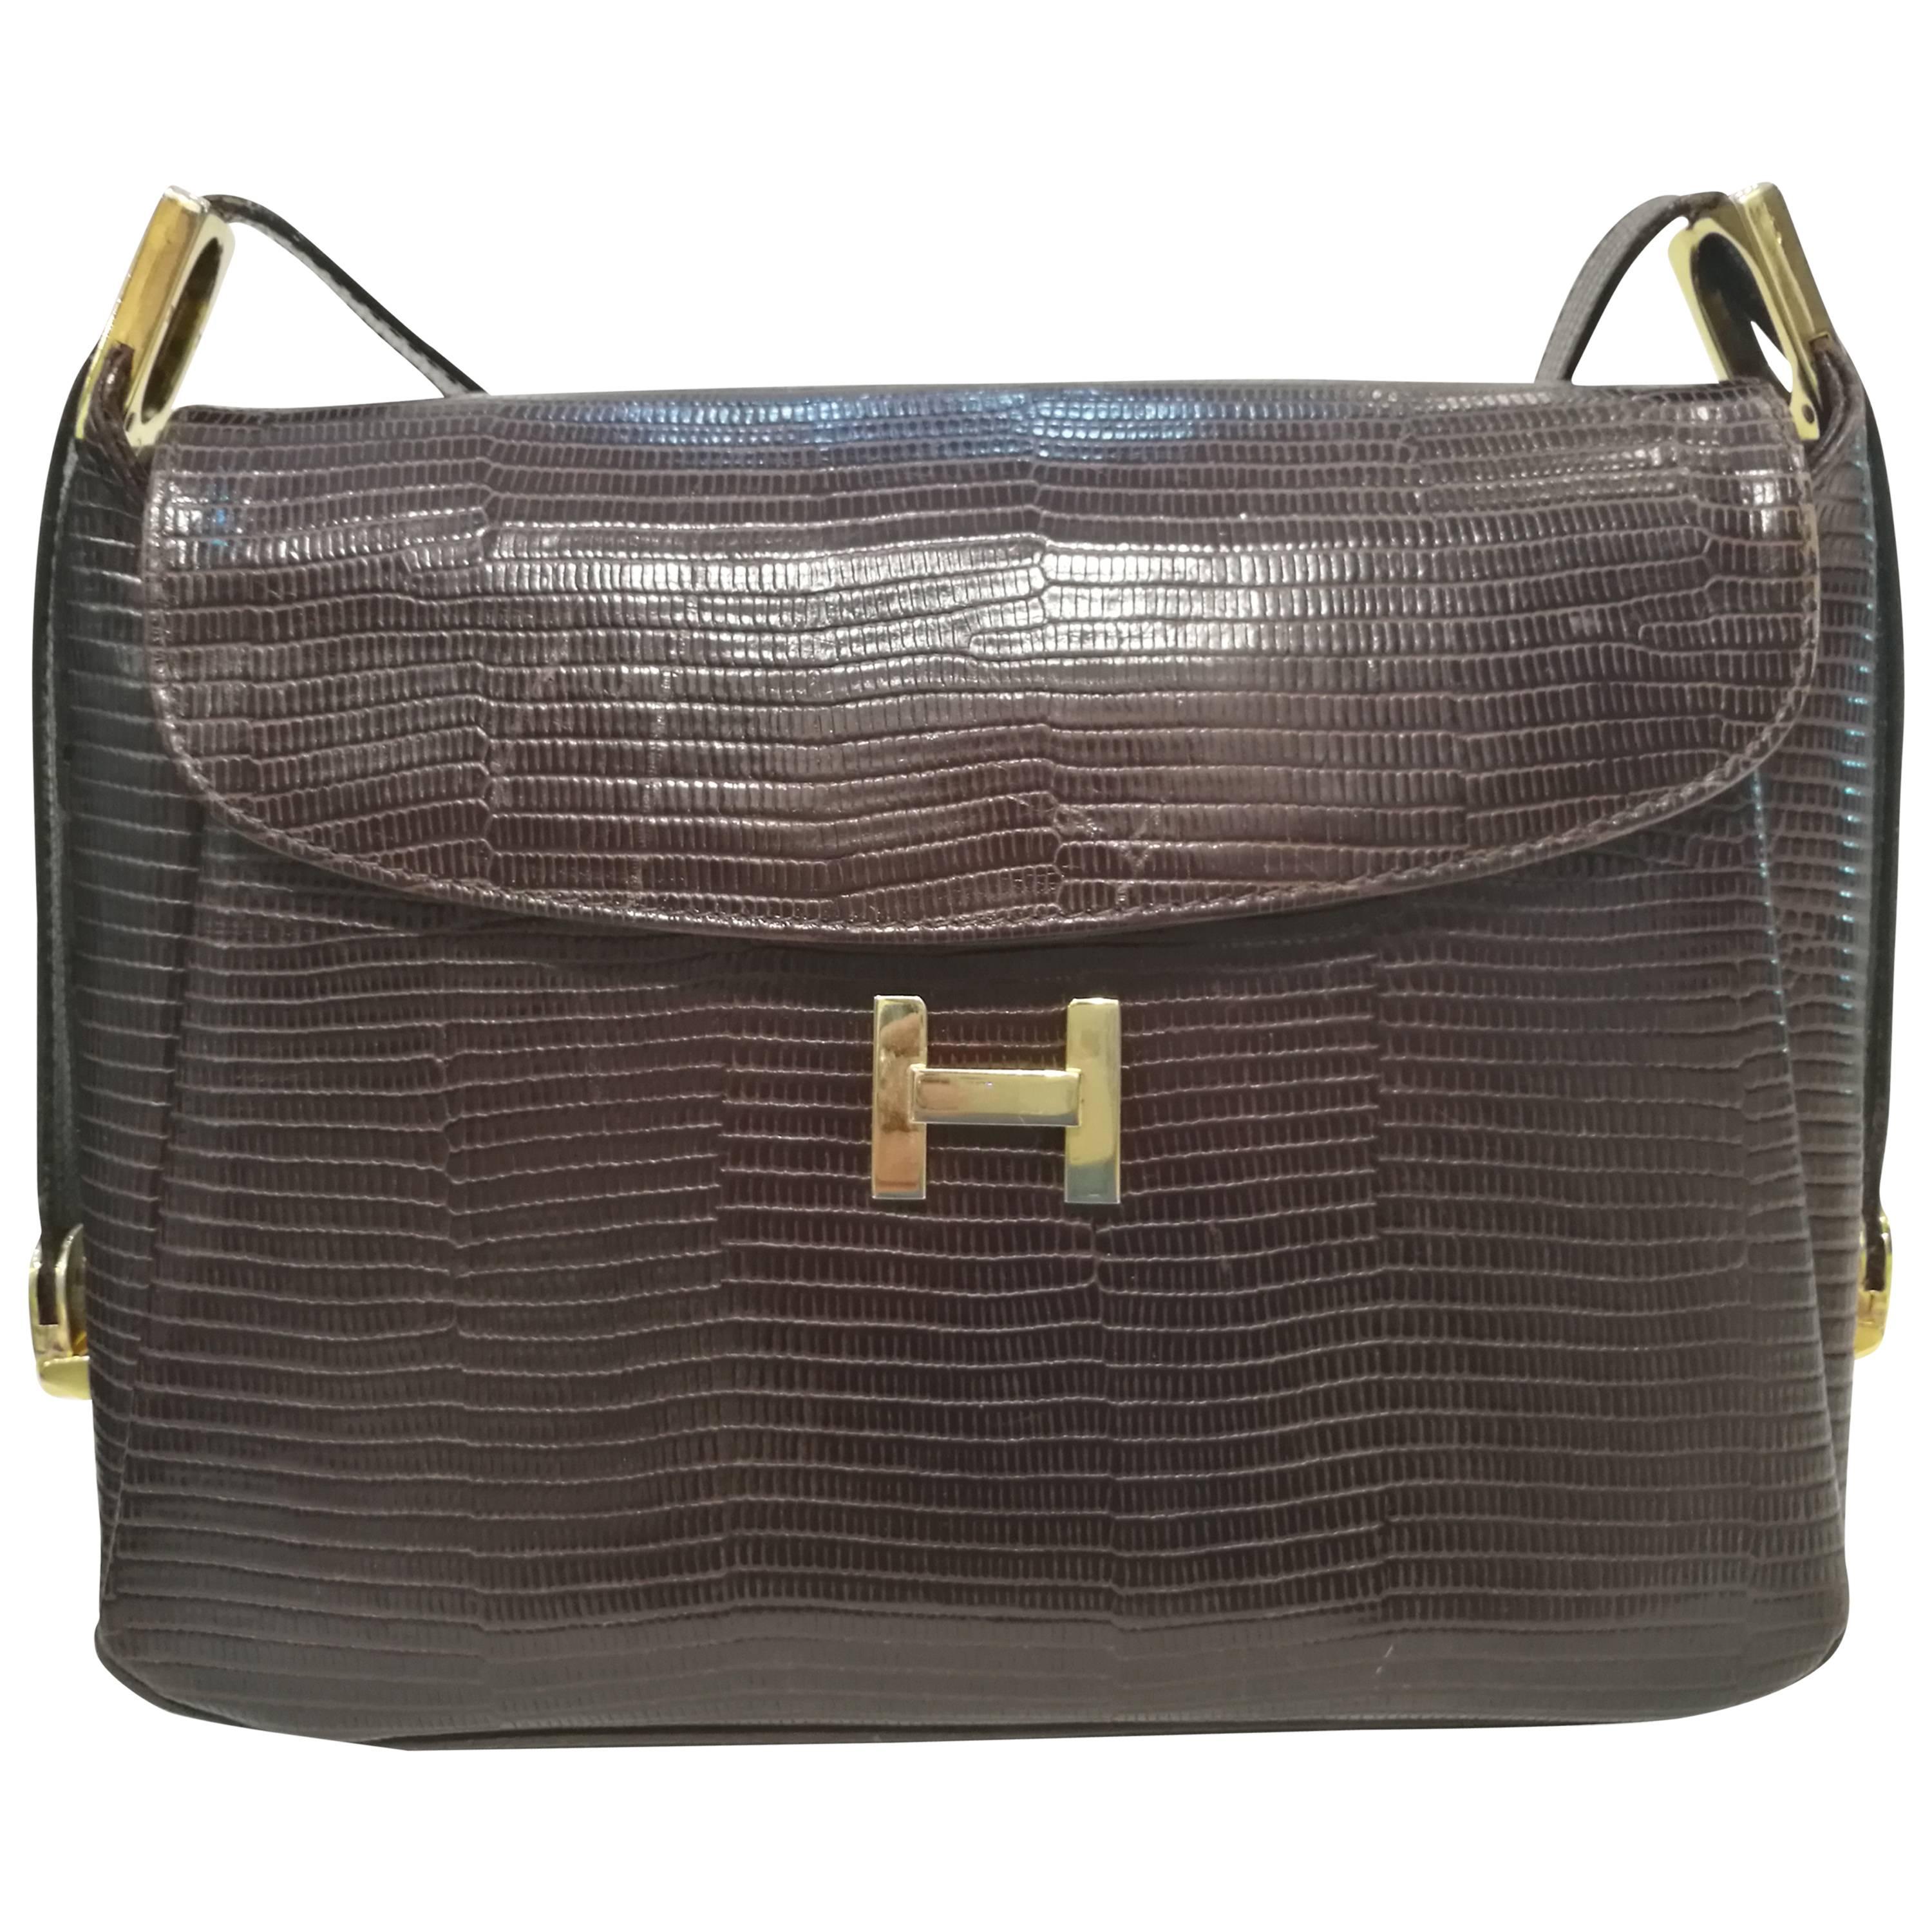 1970s Hermes Brown lizard leather bag